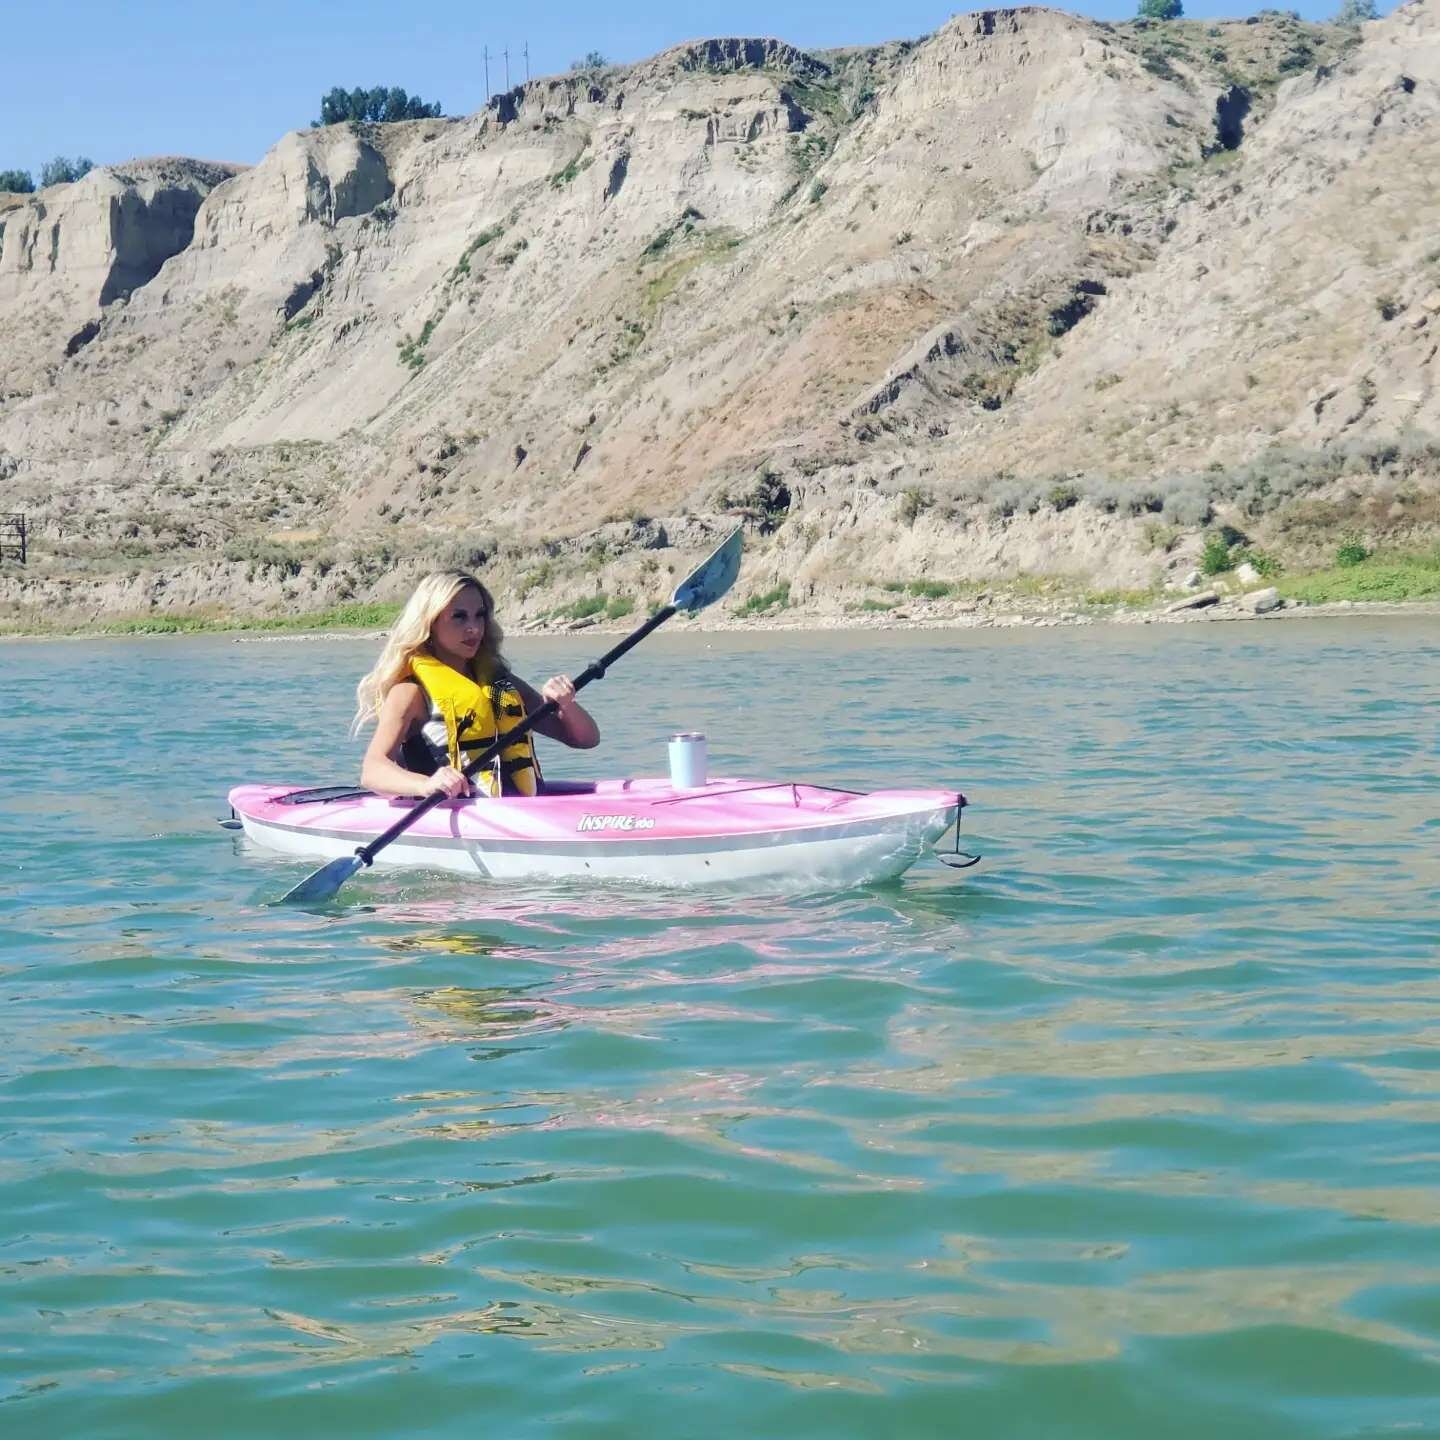 Kayaking with the next future Olympian! 🛶 🛶

@laurenvien

#KayakMedicineHat #KayakRental #OutdoorXcape #GetOutside #GetOffTheCouch #MyMHSummer #MedicineHat #TourismMedicineHat #KayakWithYourBestie